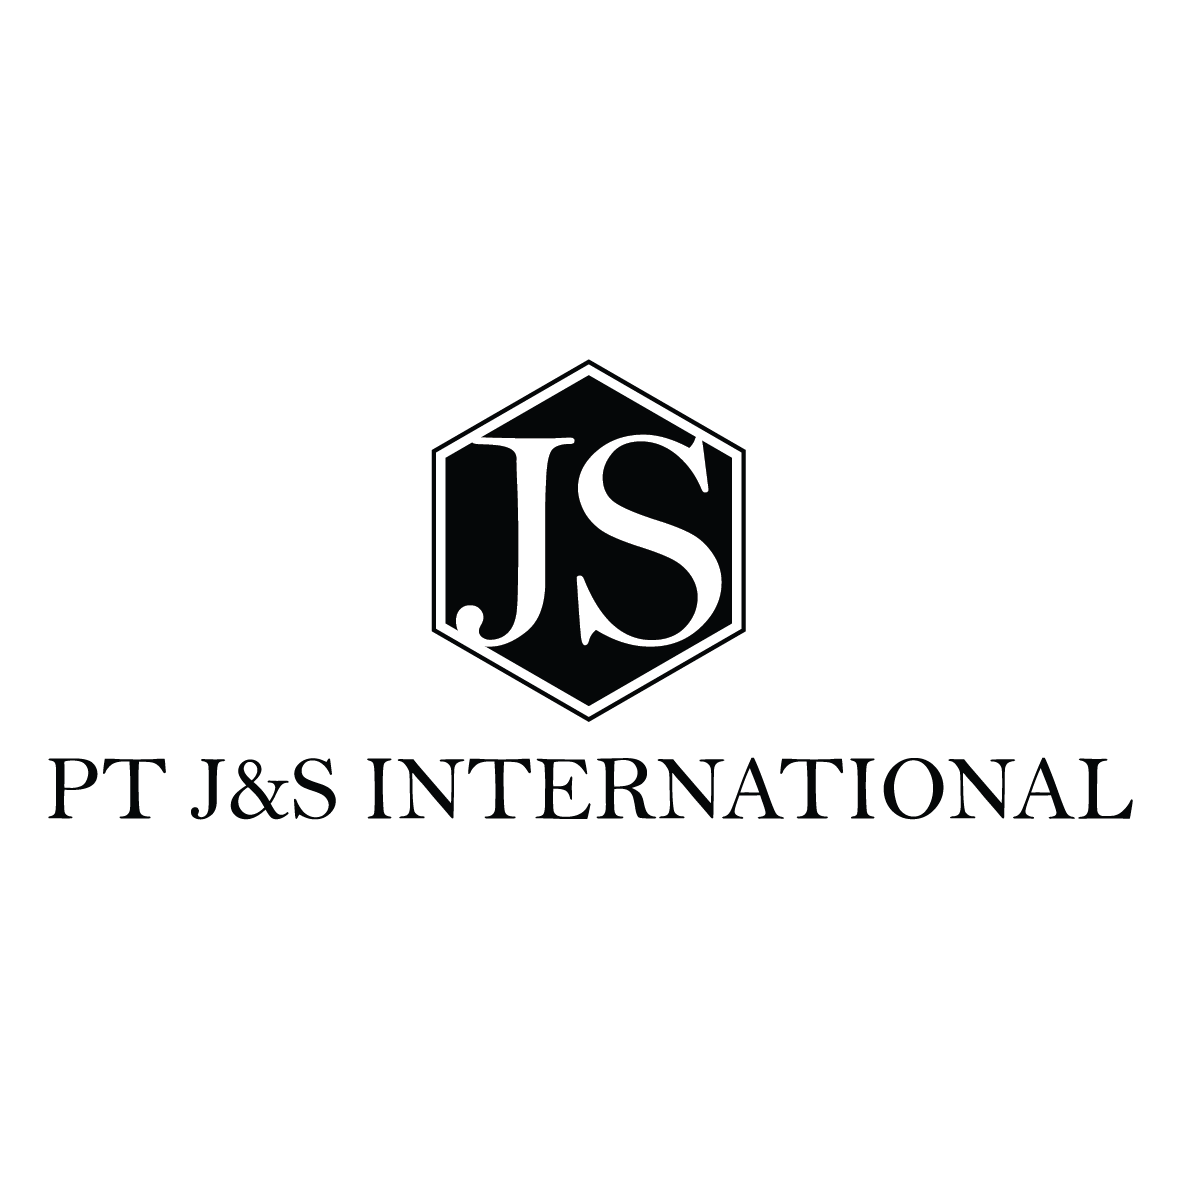 J&S INTERNATIONAL